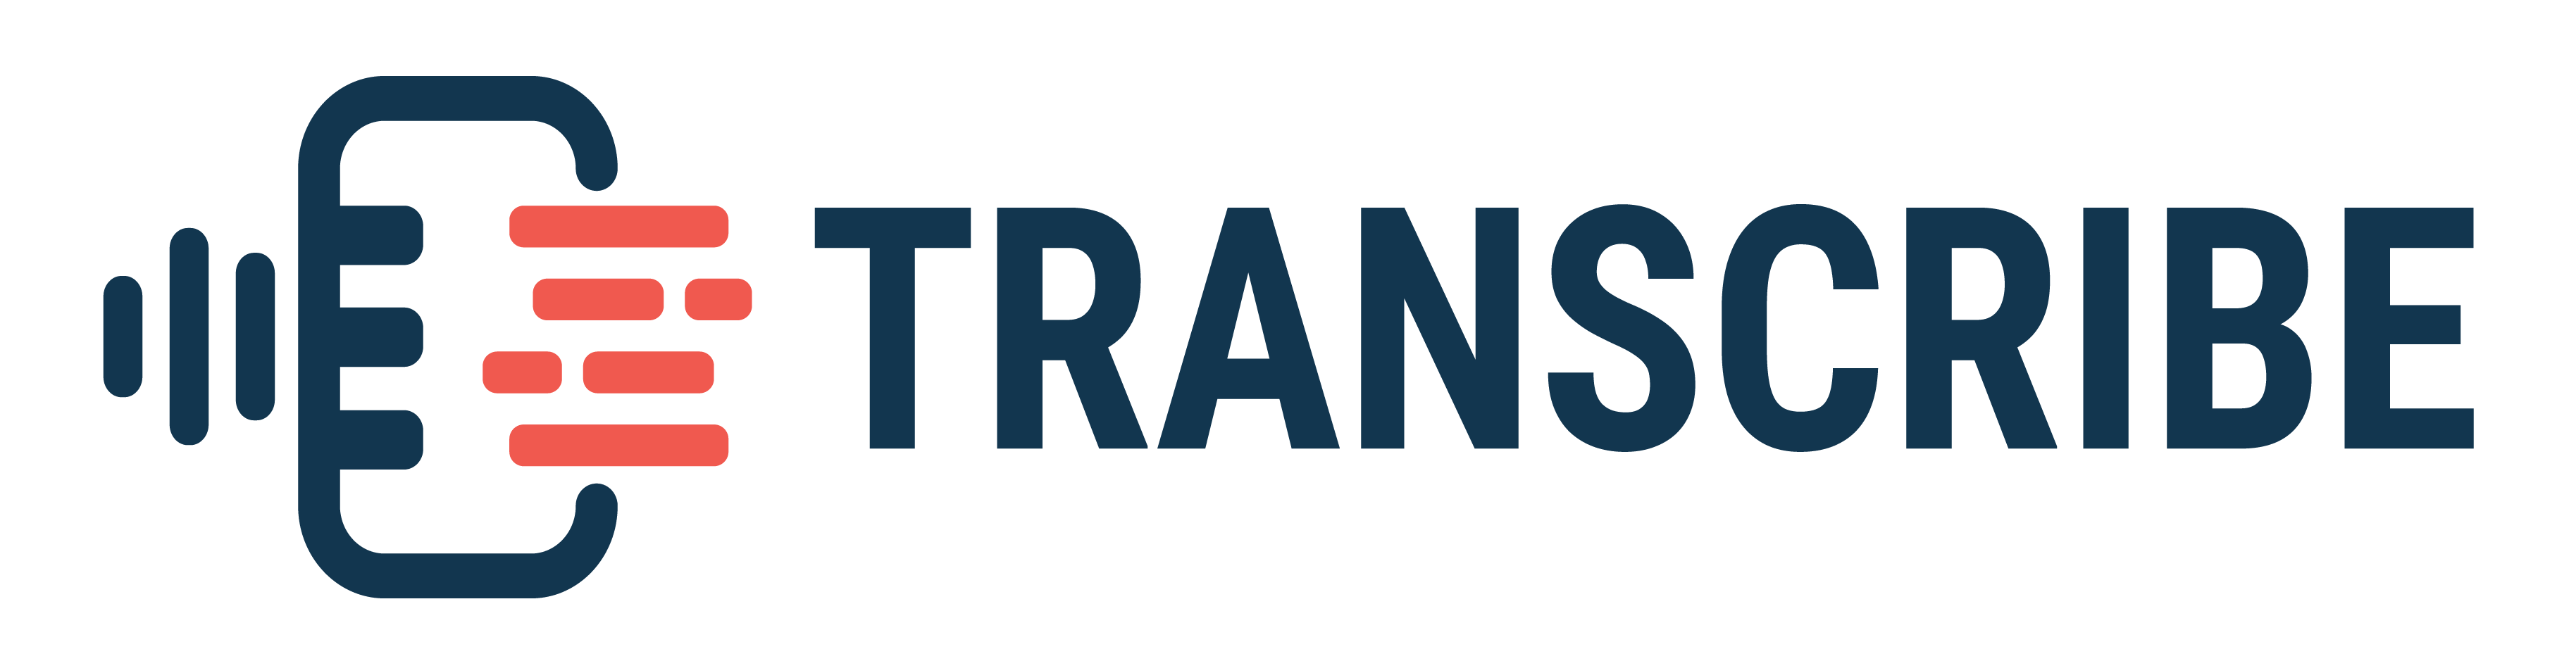 Transcribe product logo